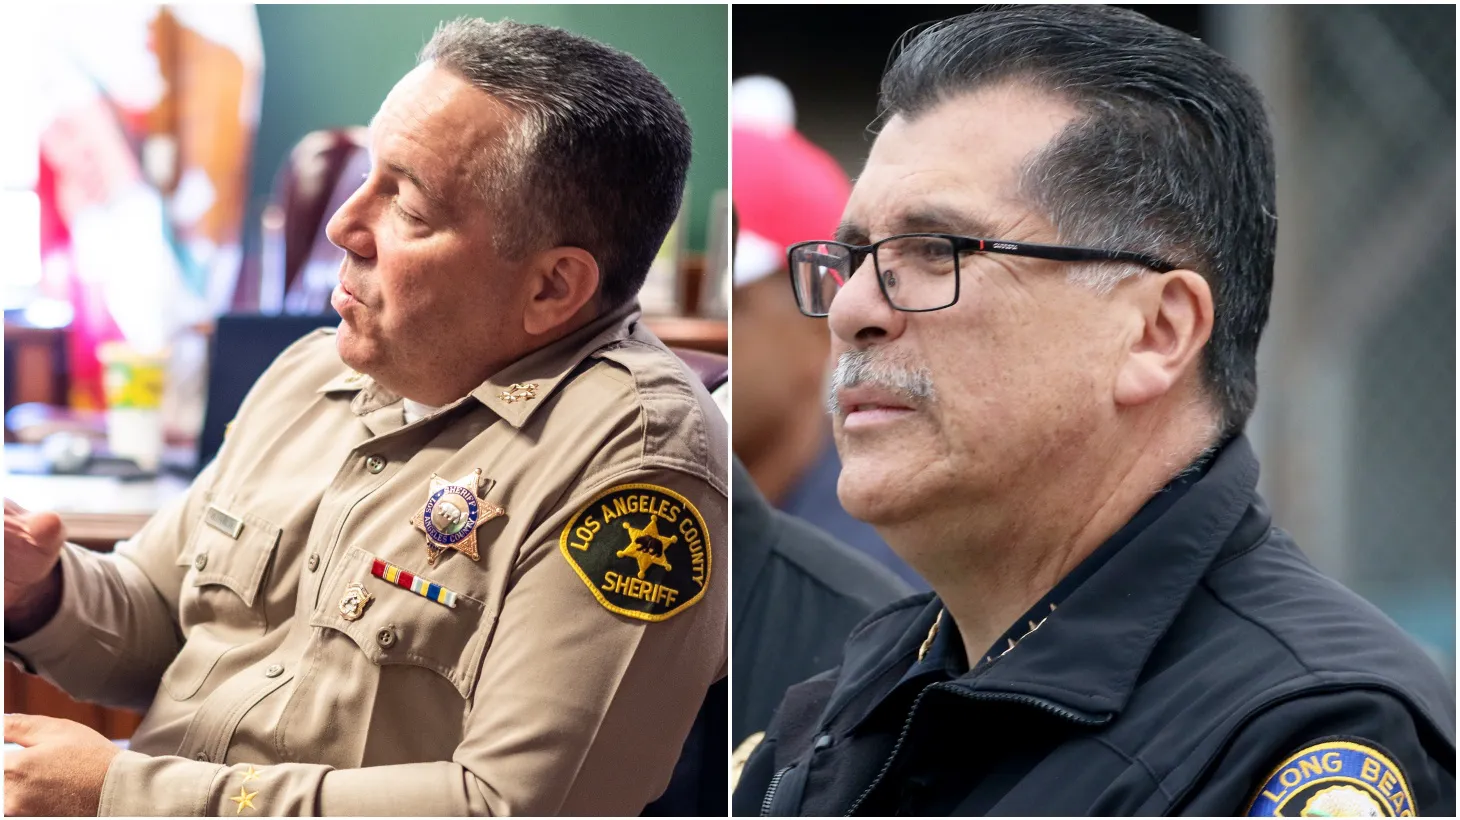 In race to be LA’s top cop, Villanueva and Luna are opposites | KCRW